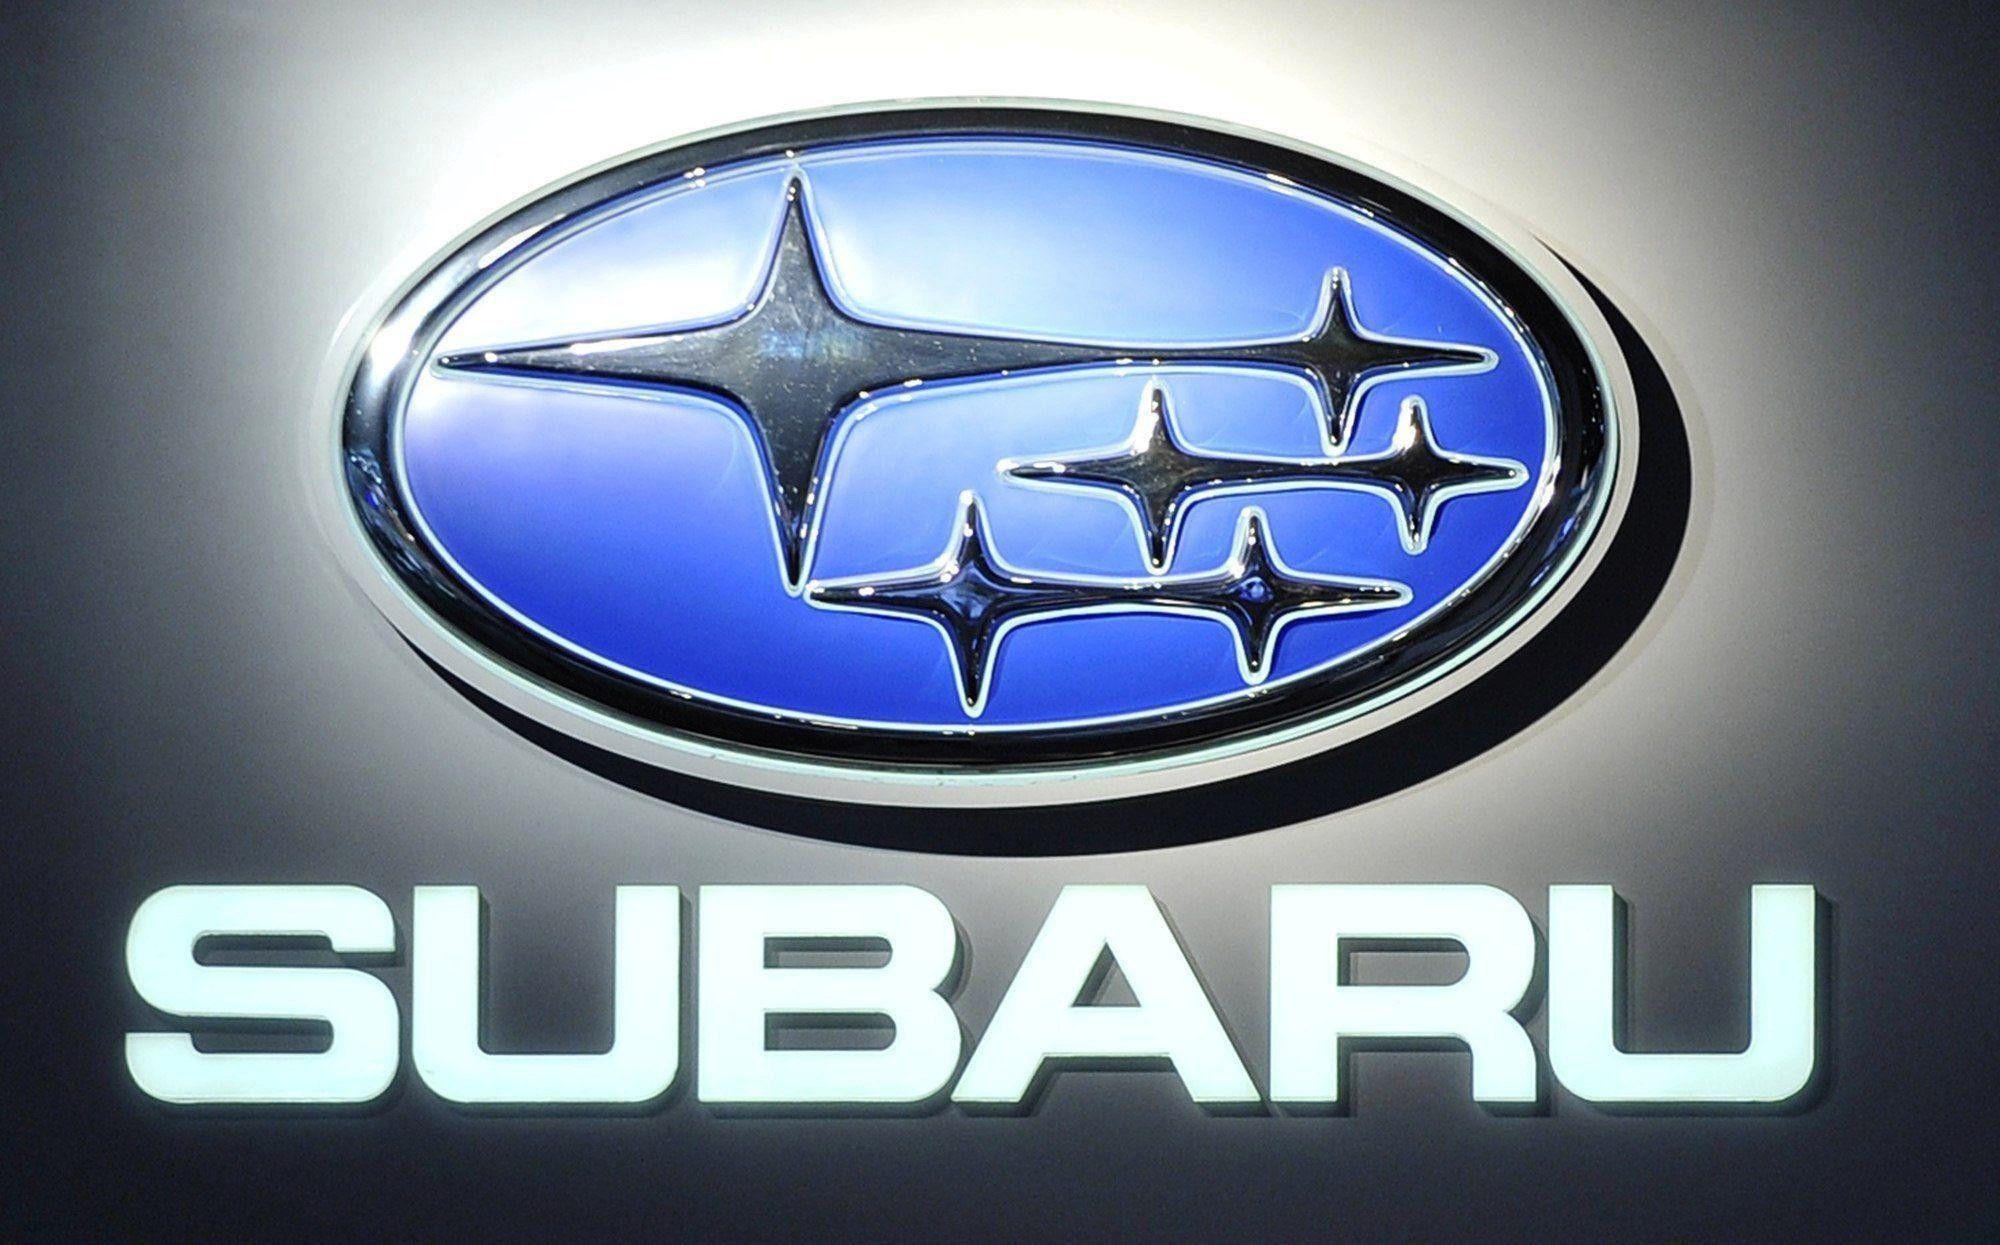 2018 Subaru Logo - Subaru Logo Wallpaper (the best image in 2018)